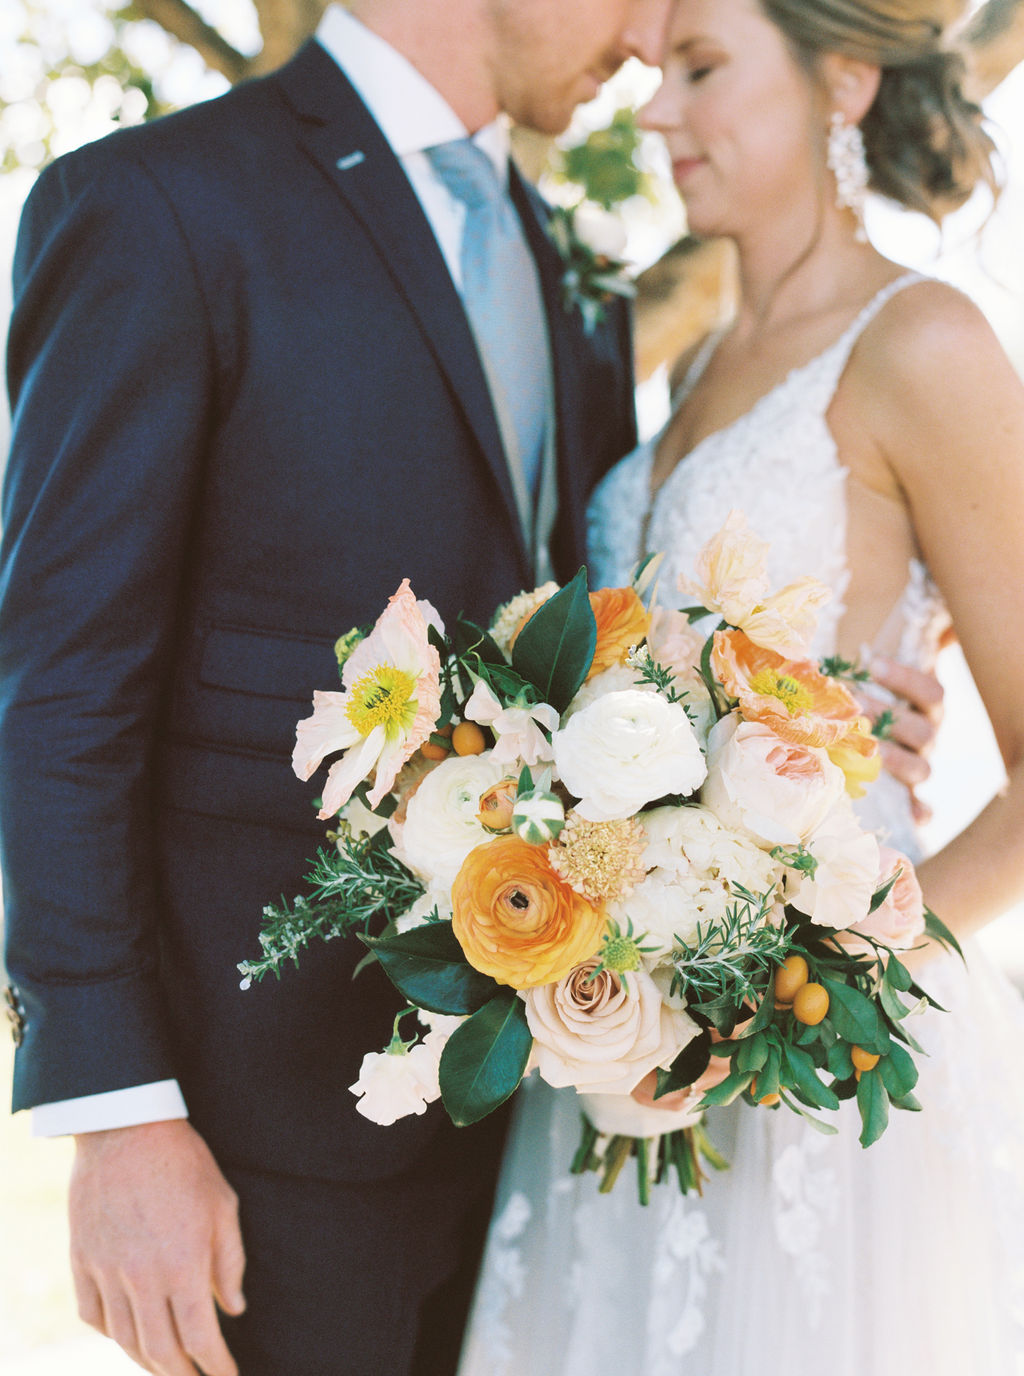 bride, groom, bouquet, dress, suit